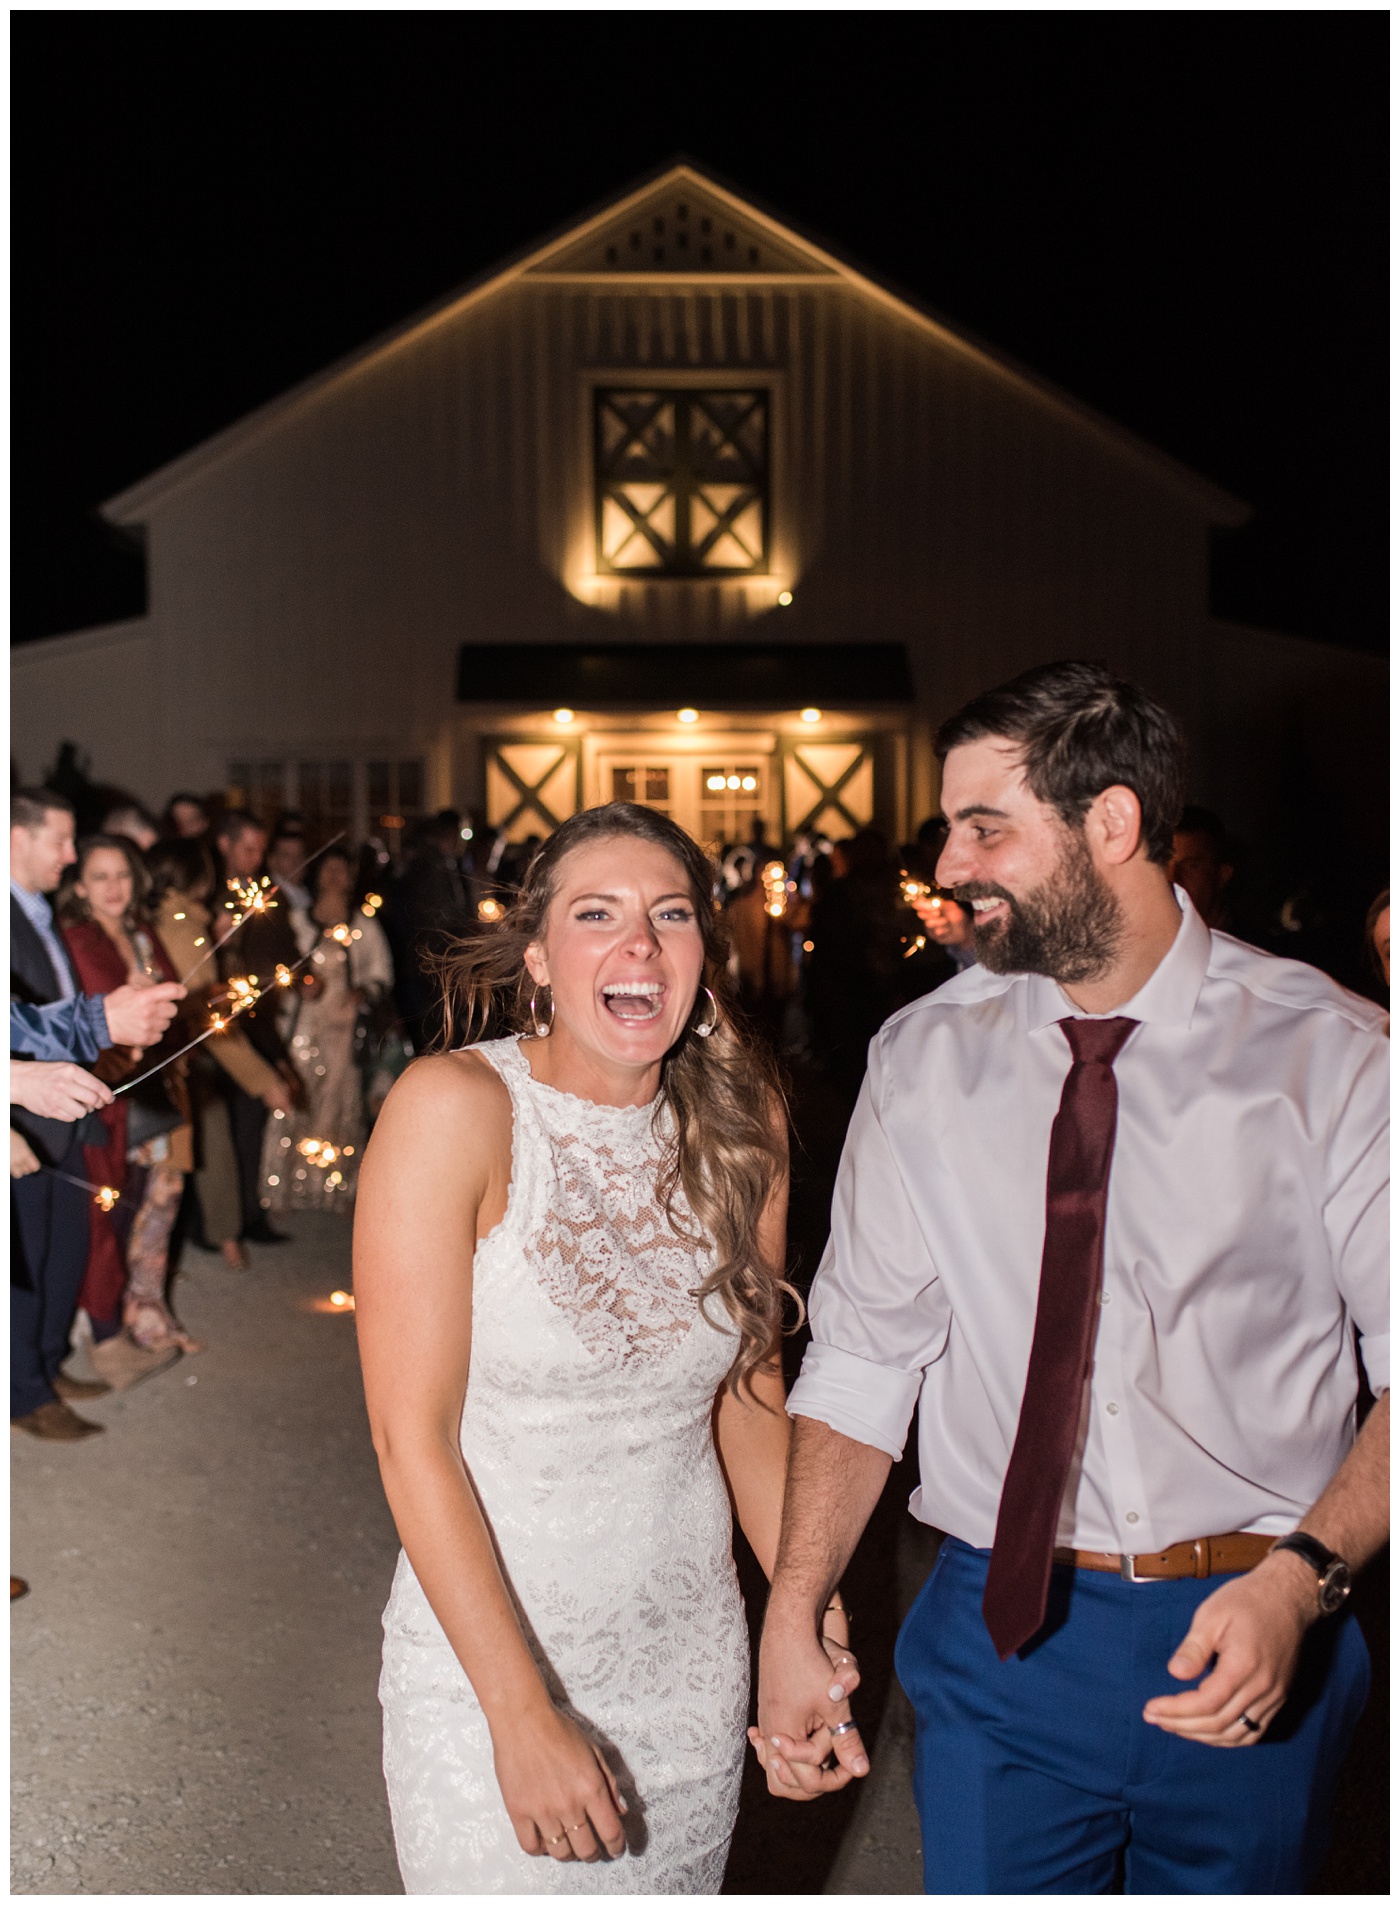 Bride and groom sparkler exit at King Family Vineyard